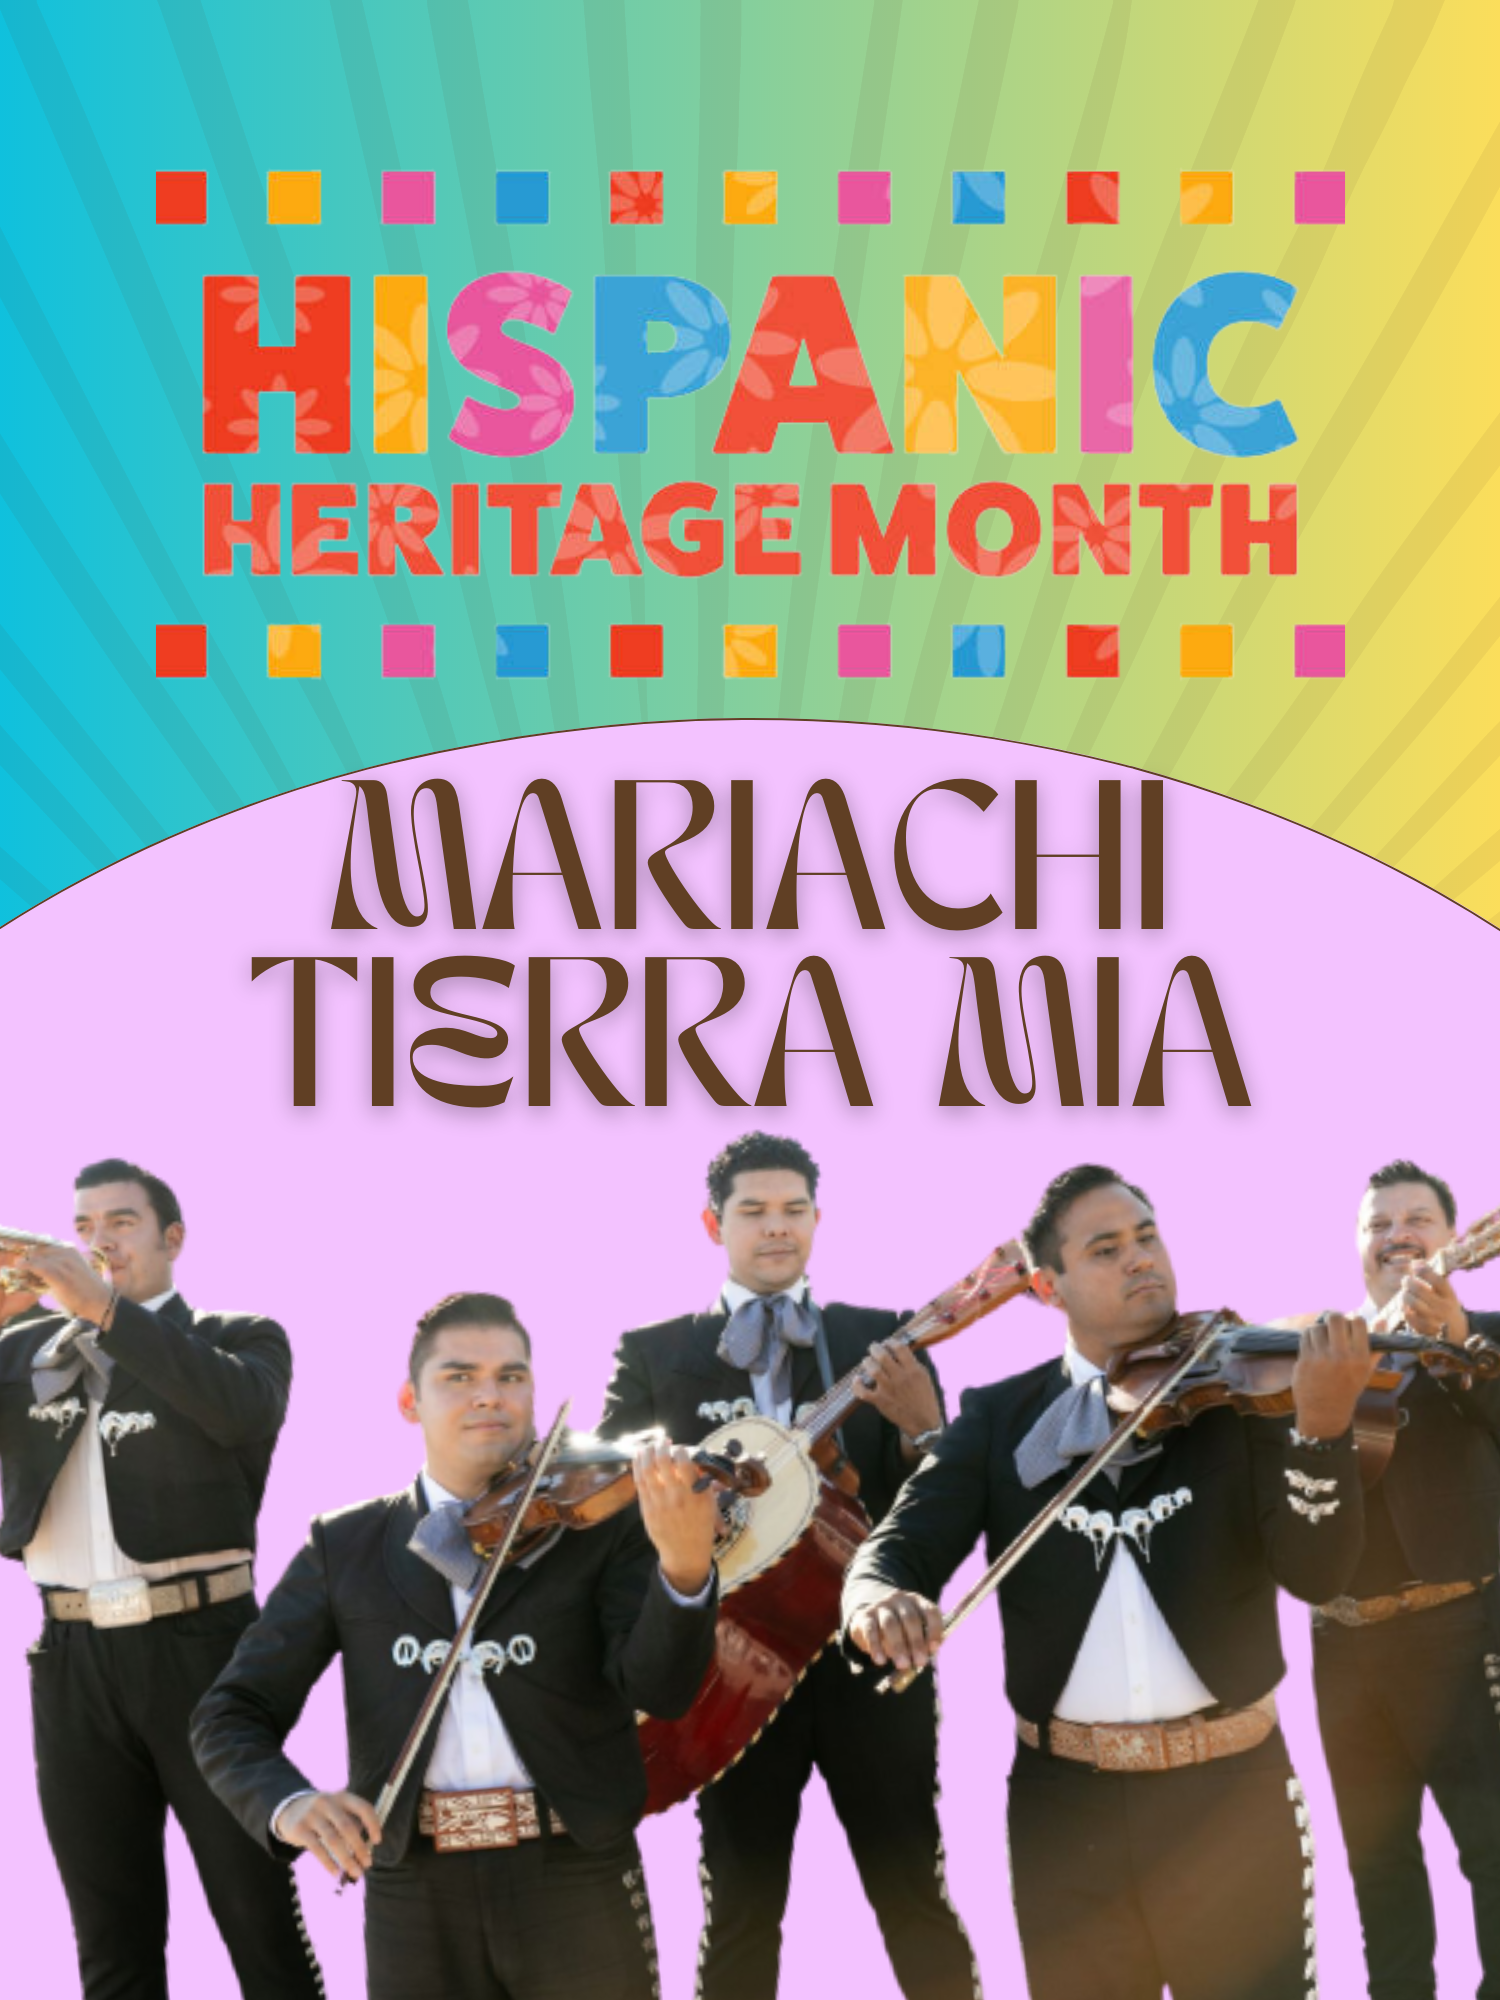 mariachi tierra mia hispanic heritage month